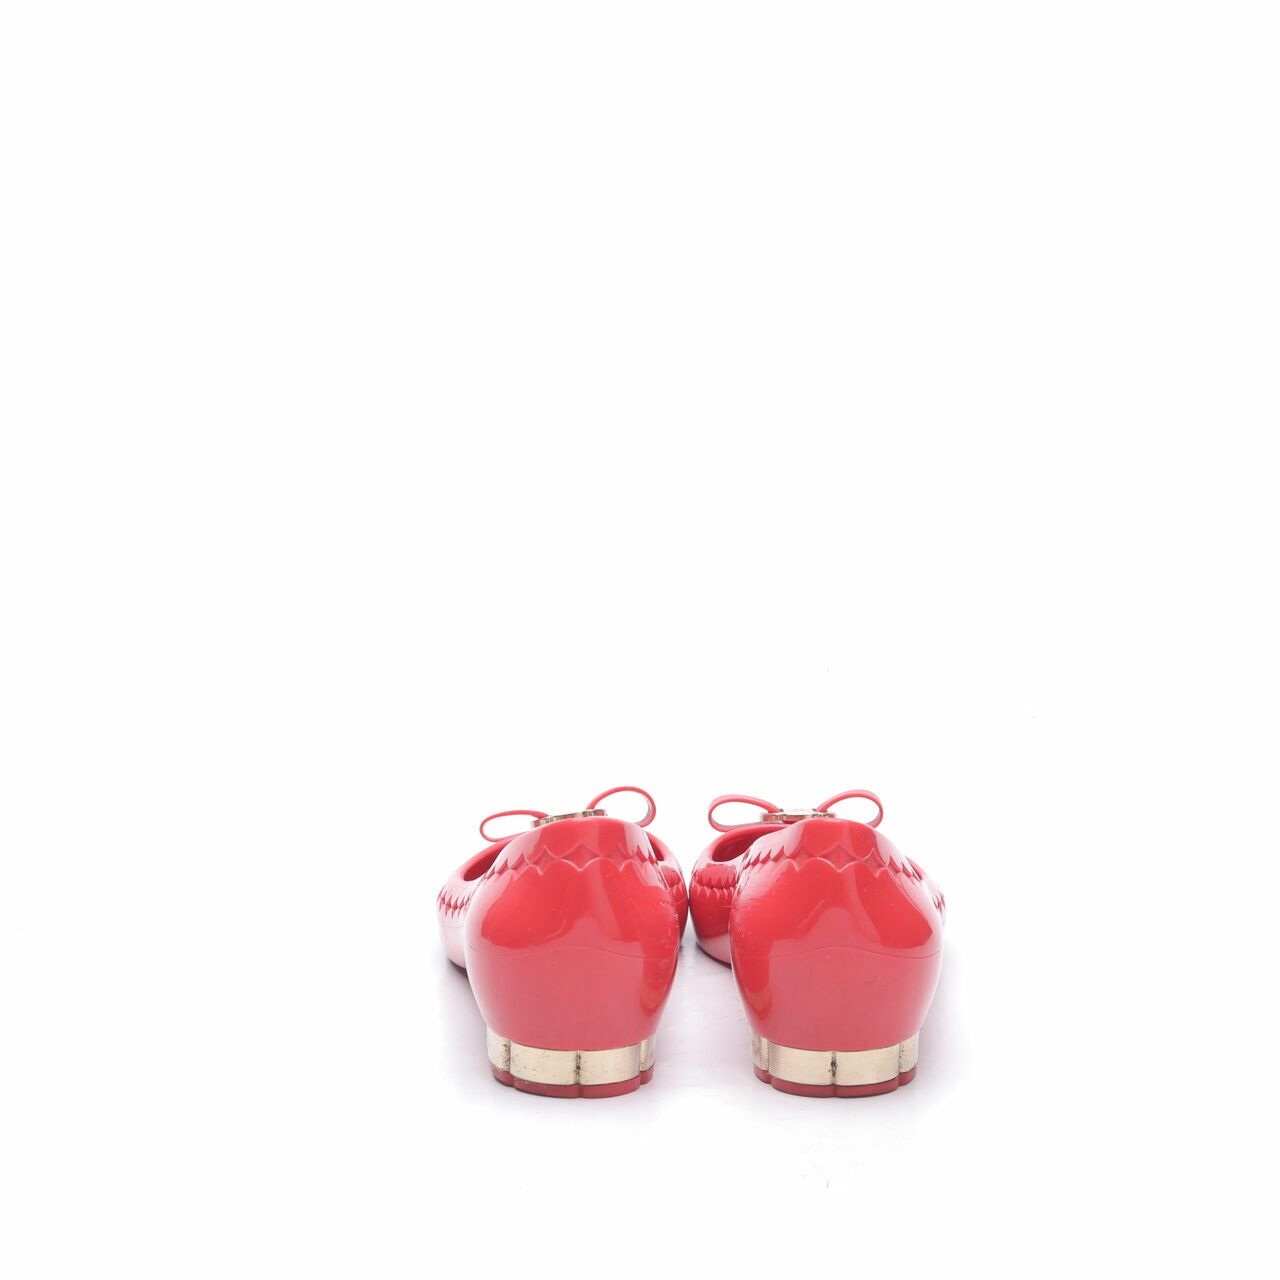 Salvatore Ferragamo Jelly Begonia Ballerina Red Flats Shoes